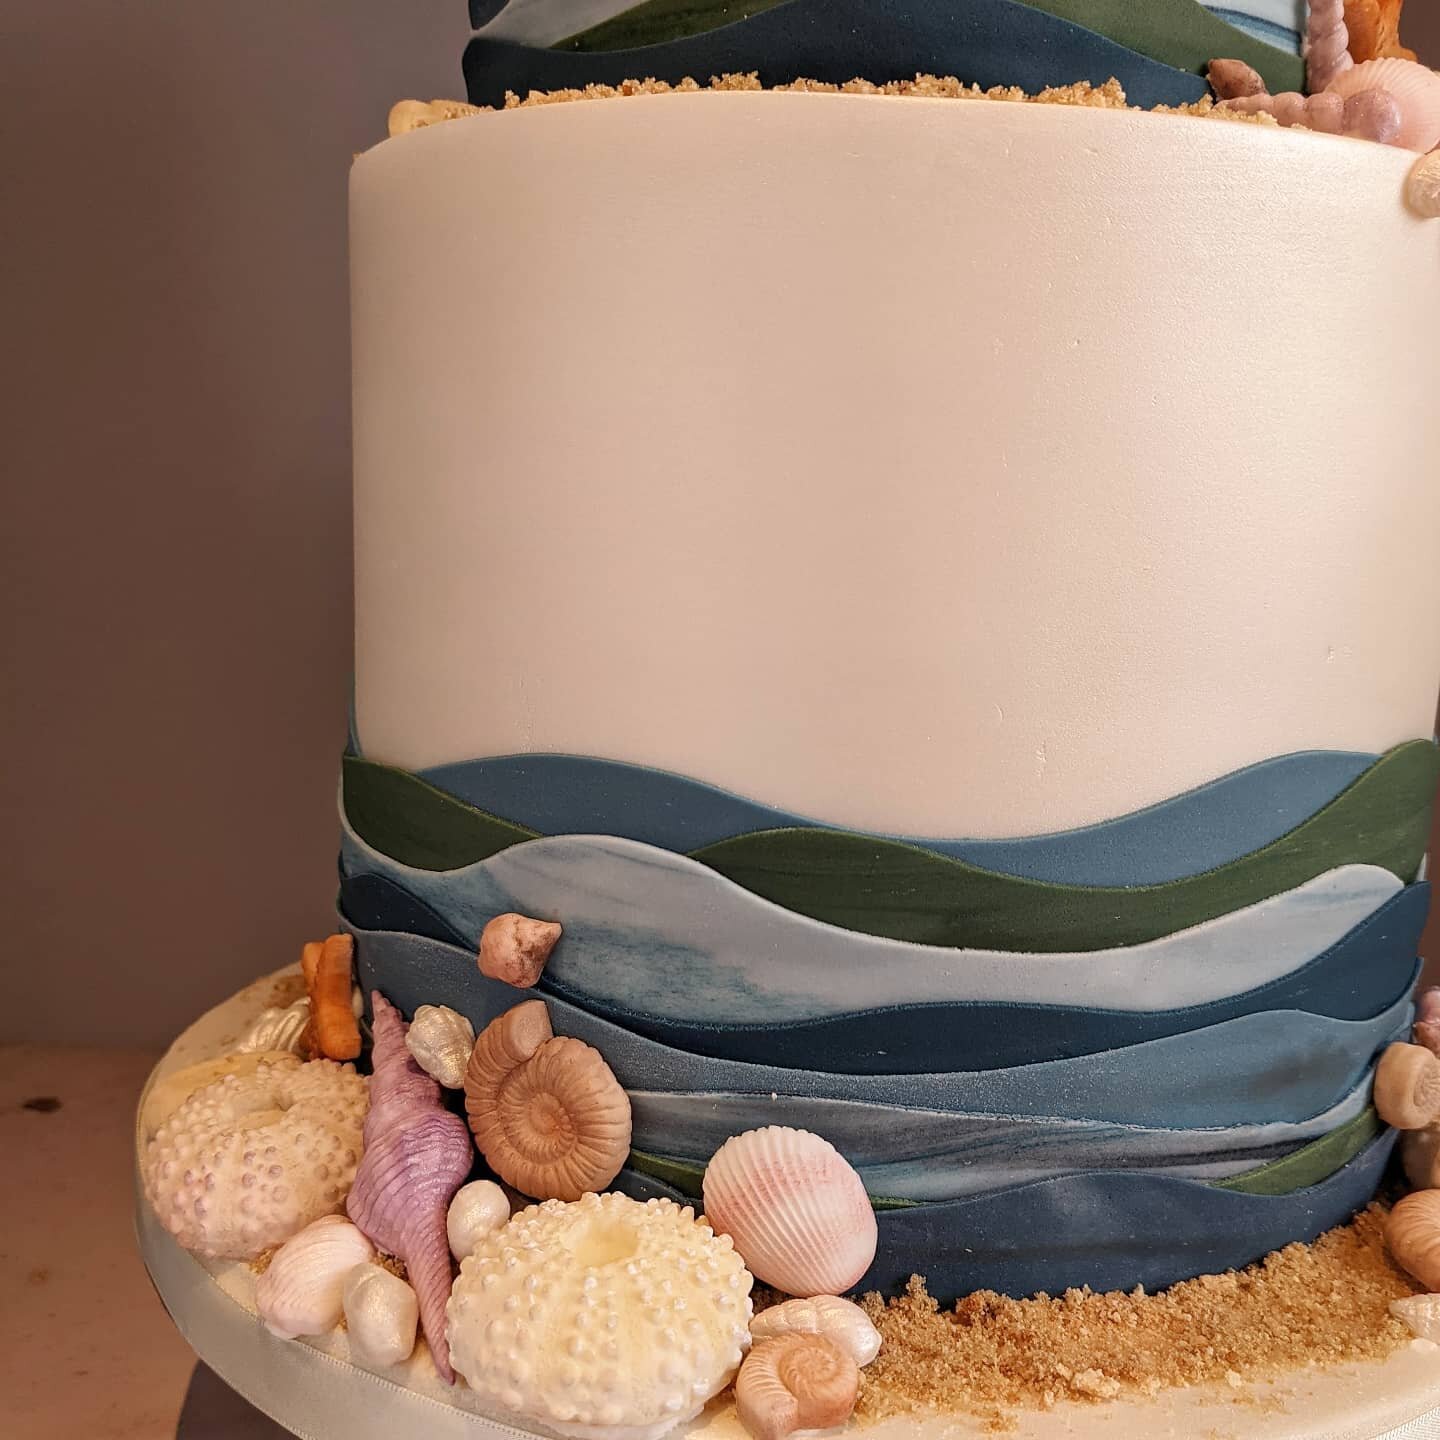 Beautiful soft lustre with these sugar waves, sand and shells! 😍 Chocolate mud cake inside ❤️
.
.
#beach #seaside #shells #weddingcake #fossils #waves #surfsup #weddingcake #sunnierdaysarecoming #sunshine #thepinkcakebox #shottlehall #derbyshirewedd